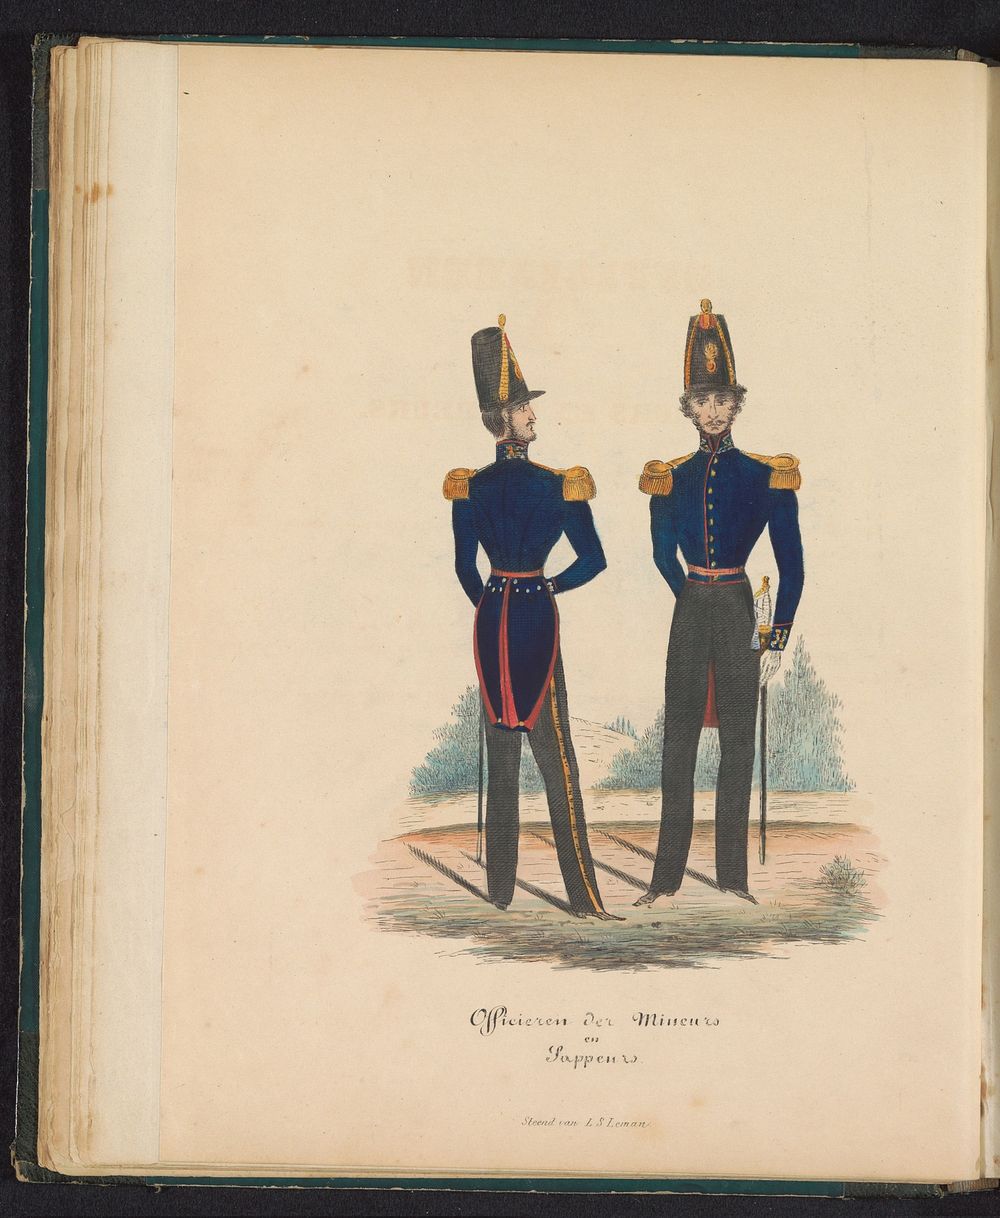 Uniform van de officieren van de mineurs en sappeurs, 1845 (1845) by Louis Salomon Leman and Louis Salomon Leman